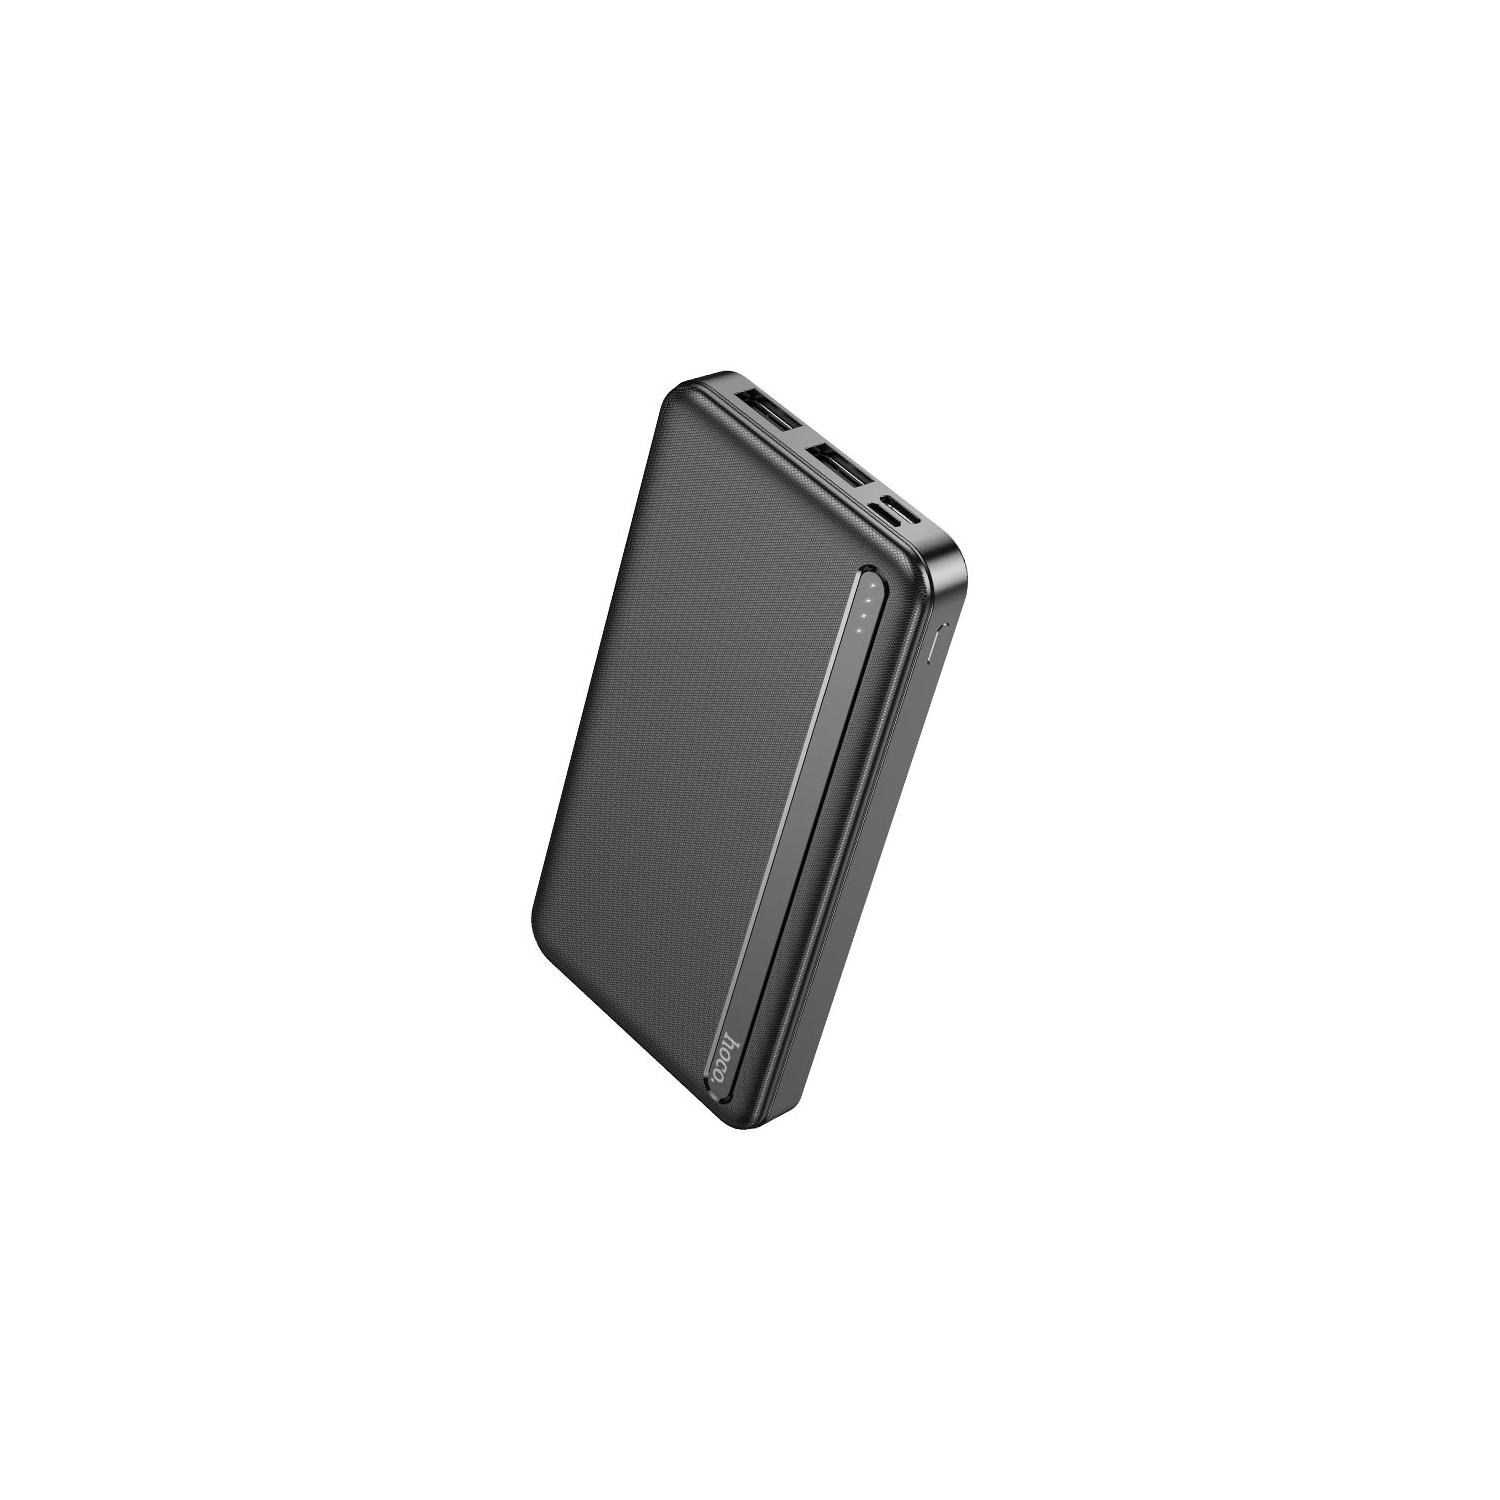 10000mAh Mirco USB USB C External Battery Charger Portable Power Bank & LED for iPhone Samsung iPad Tablets